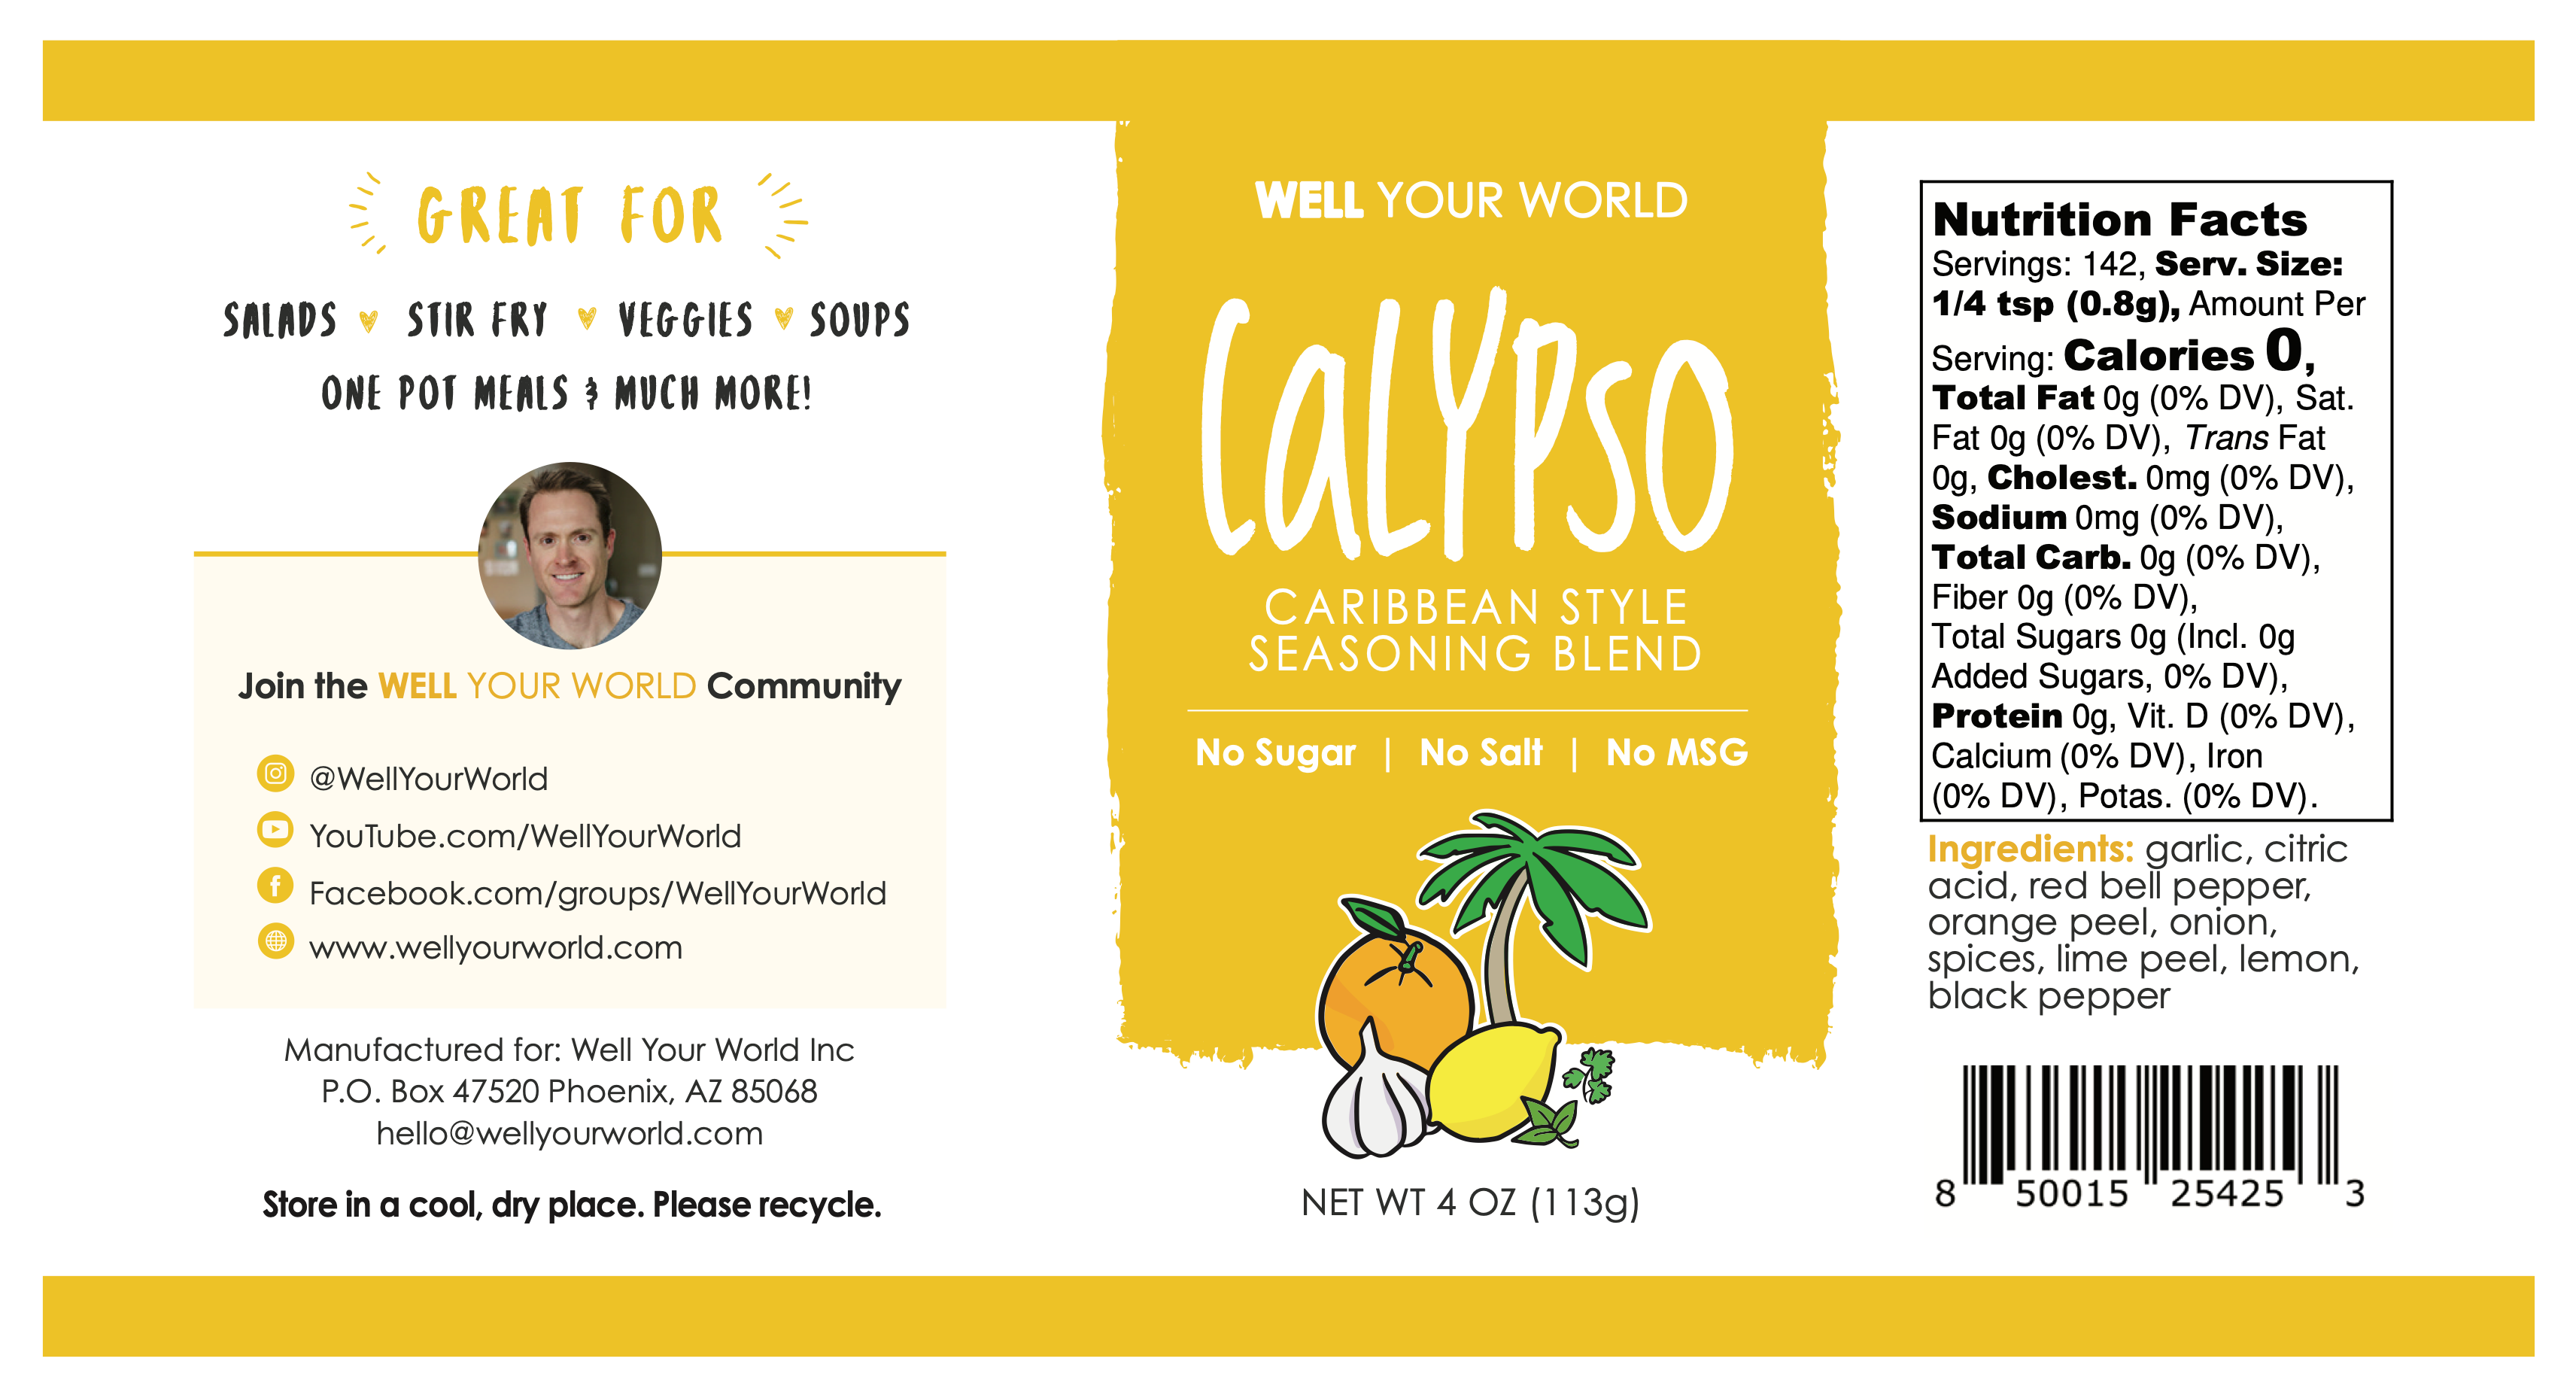 Sunshine Seasoning Bundle 20% Off (Calypso, Lemon Pepper, Chili Lime)